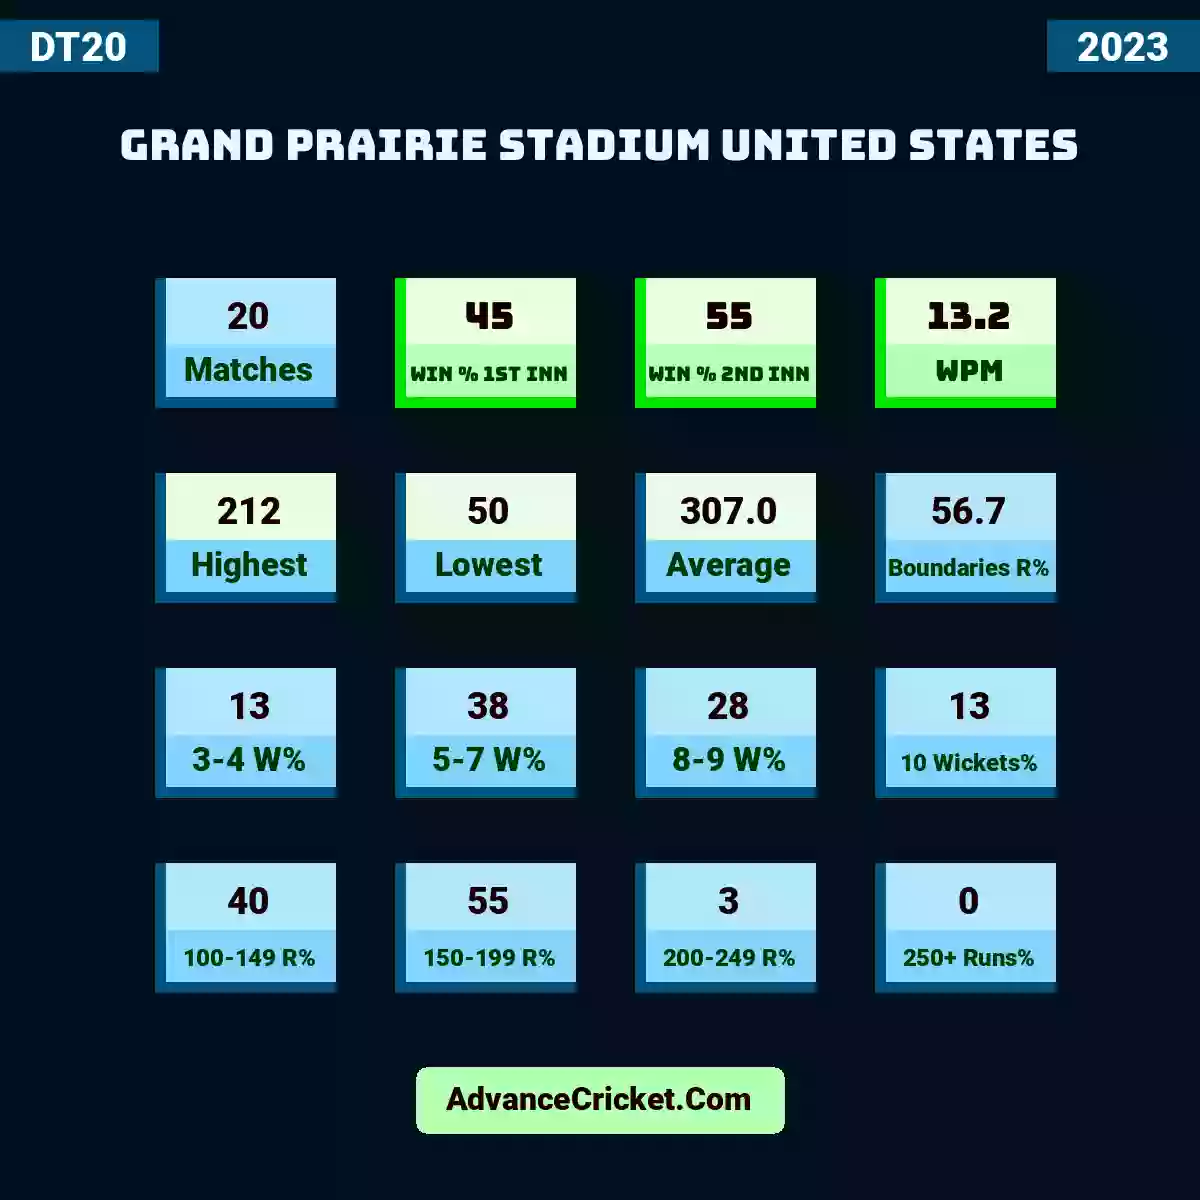 Image showing Grand Prairie Stadium United States with Matches: 20, Win % 1st Inn: 45, Win % 2nd Inn: 55, WPM: 13.2, Highest: 212, Lowest: 50, Average: 307.0, Boundaries R%: 56.7, 3-4 W%: 13, 5-7 W%: 38, 8-9 W%: 28, 10 Wickets%: 13, 100-149 R%: 40, 150-199 R%: 55, 200-249 R%: 3, 250+ Runs%: 0.